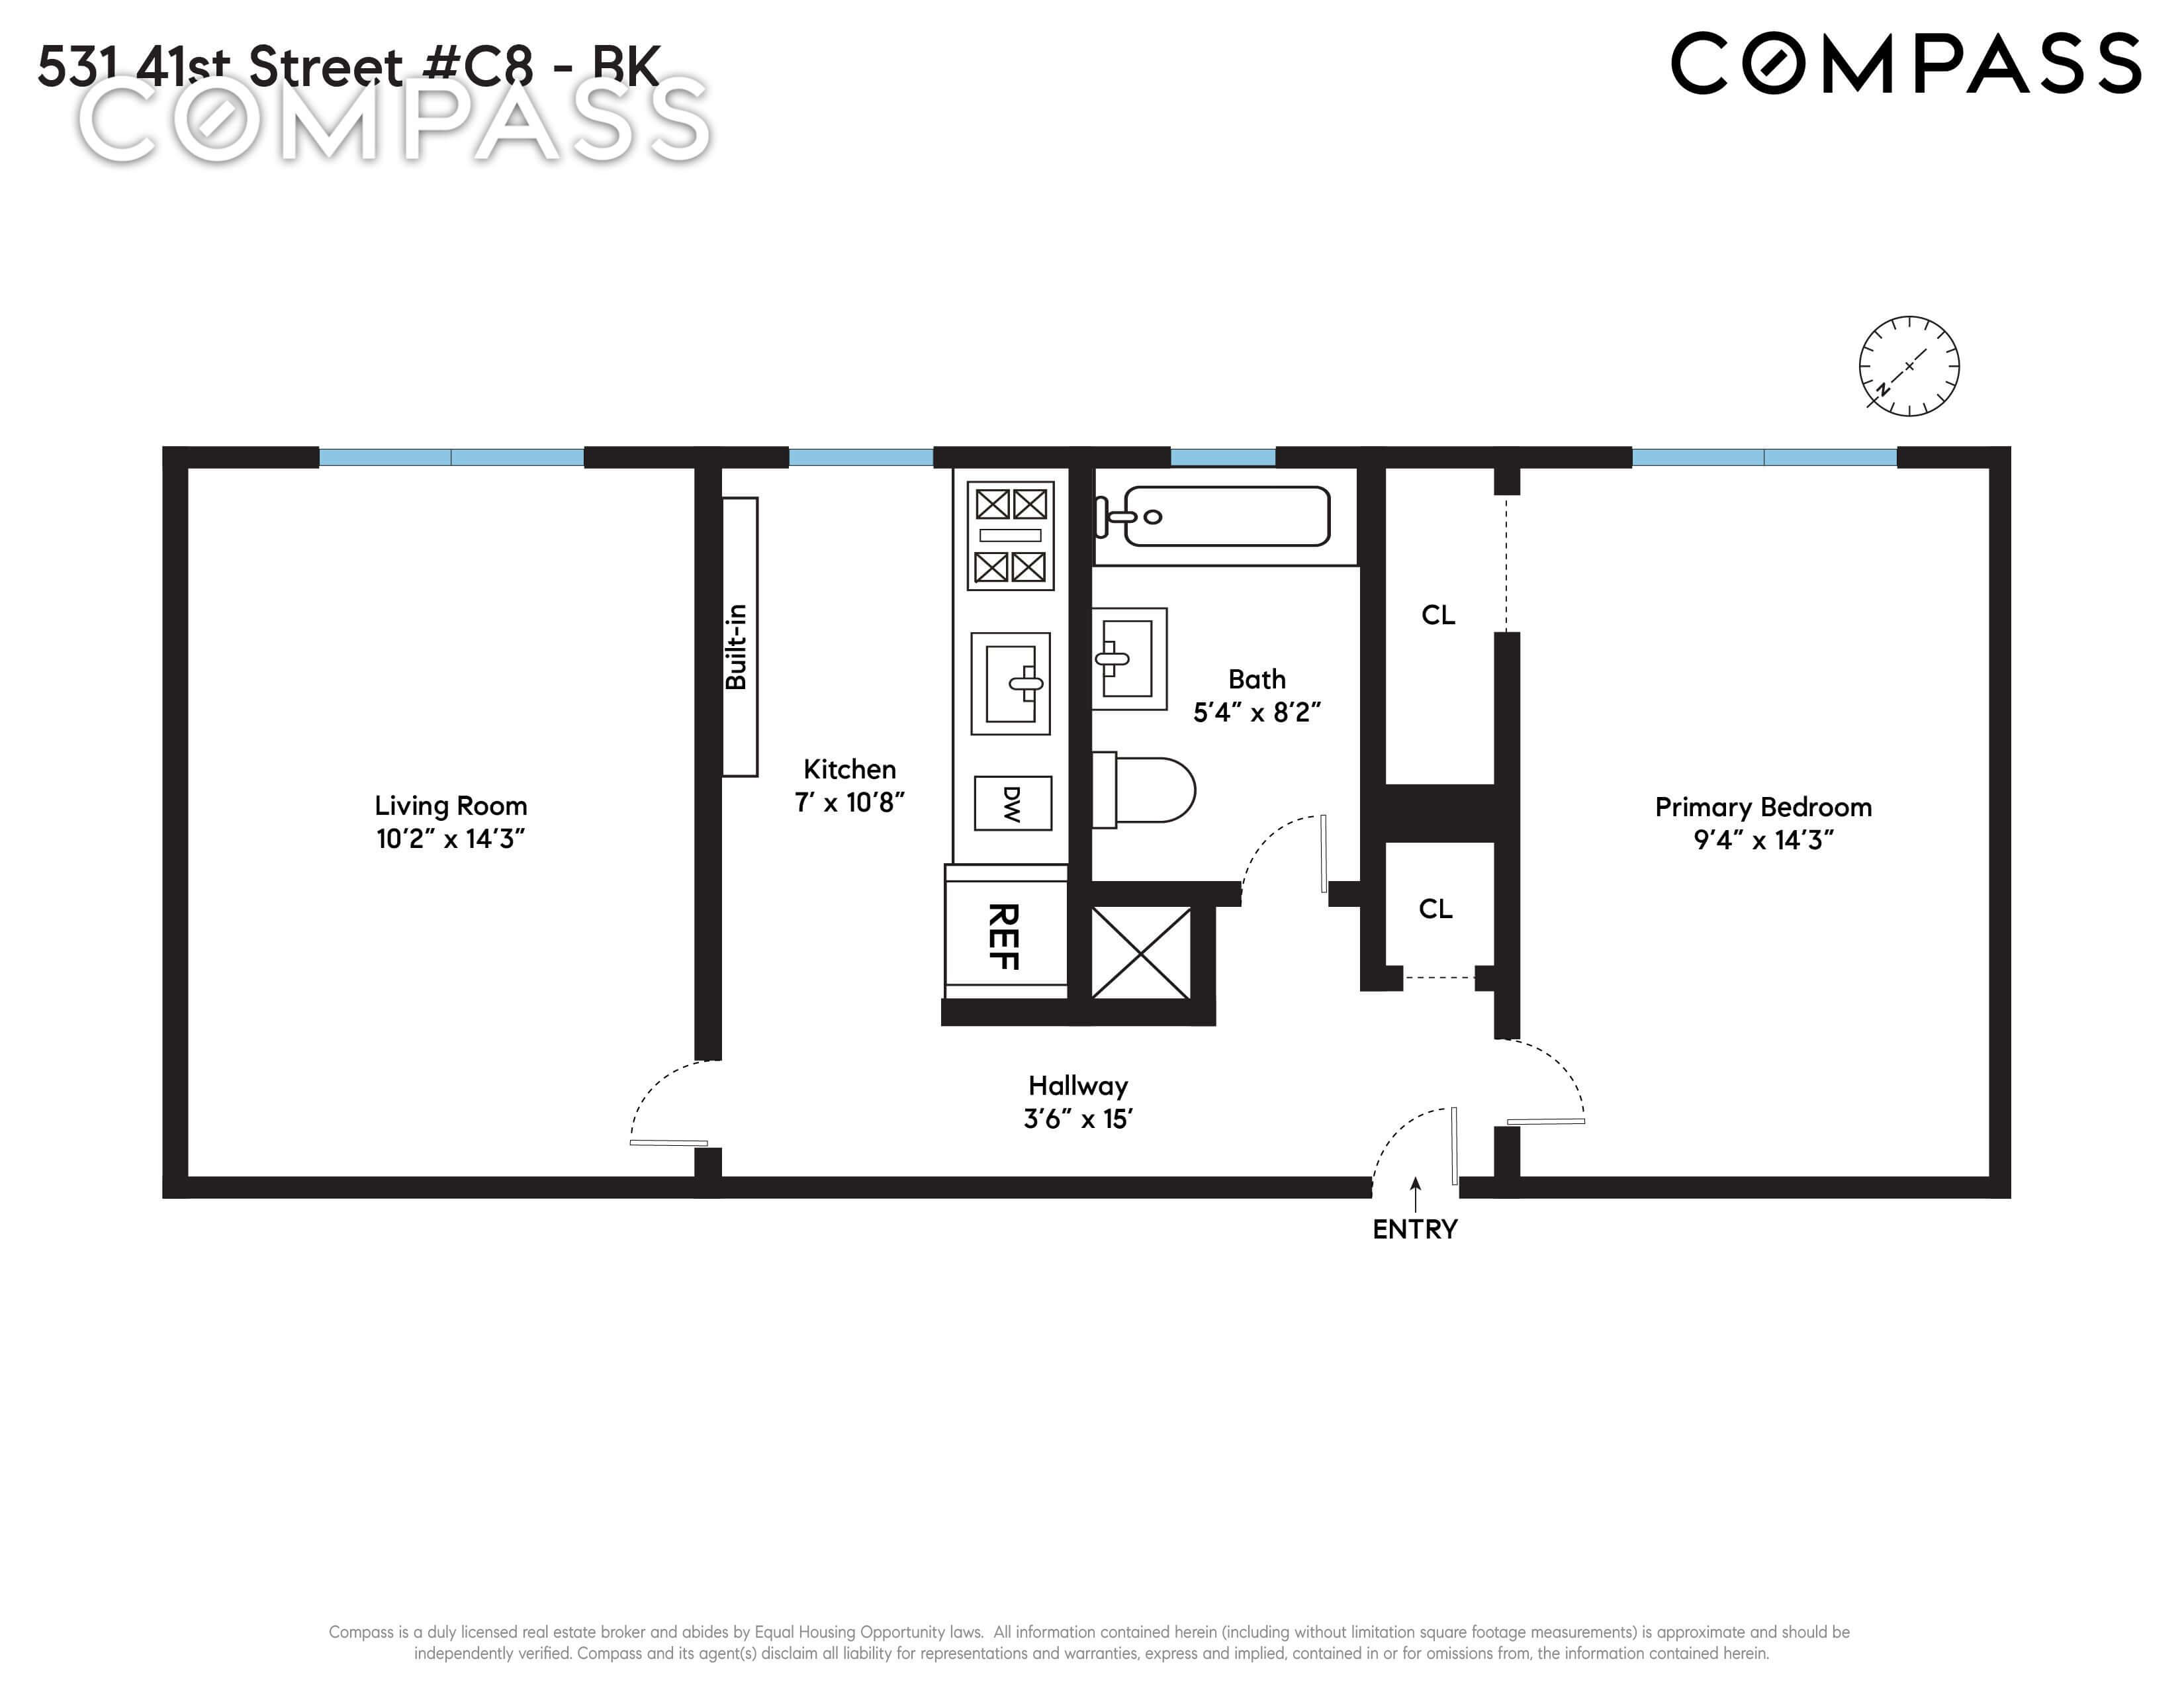 floorplan of apt c8 in 521 41st street